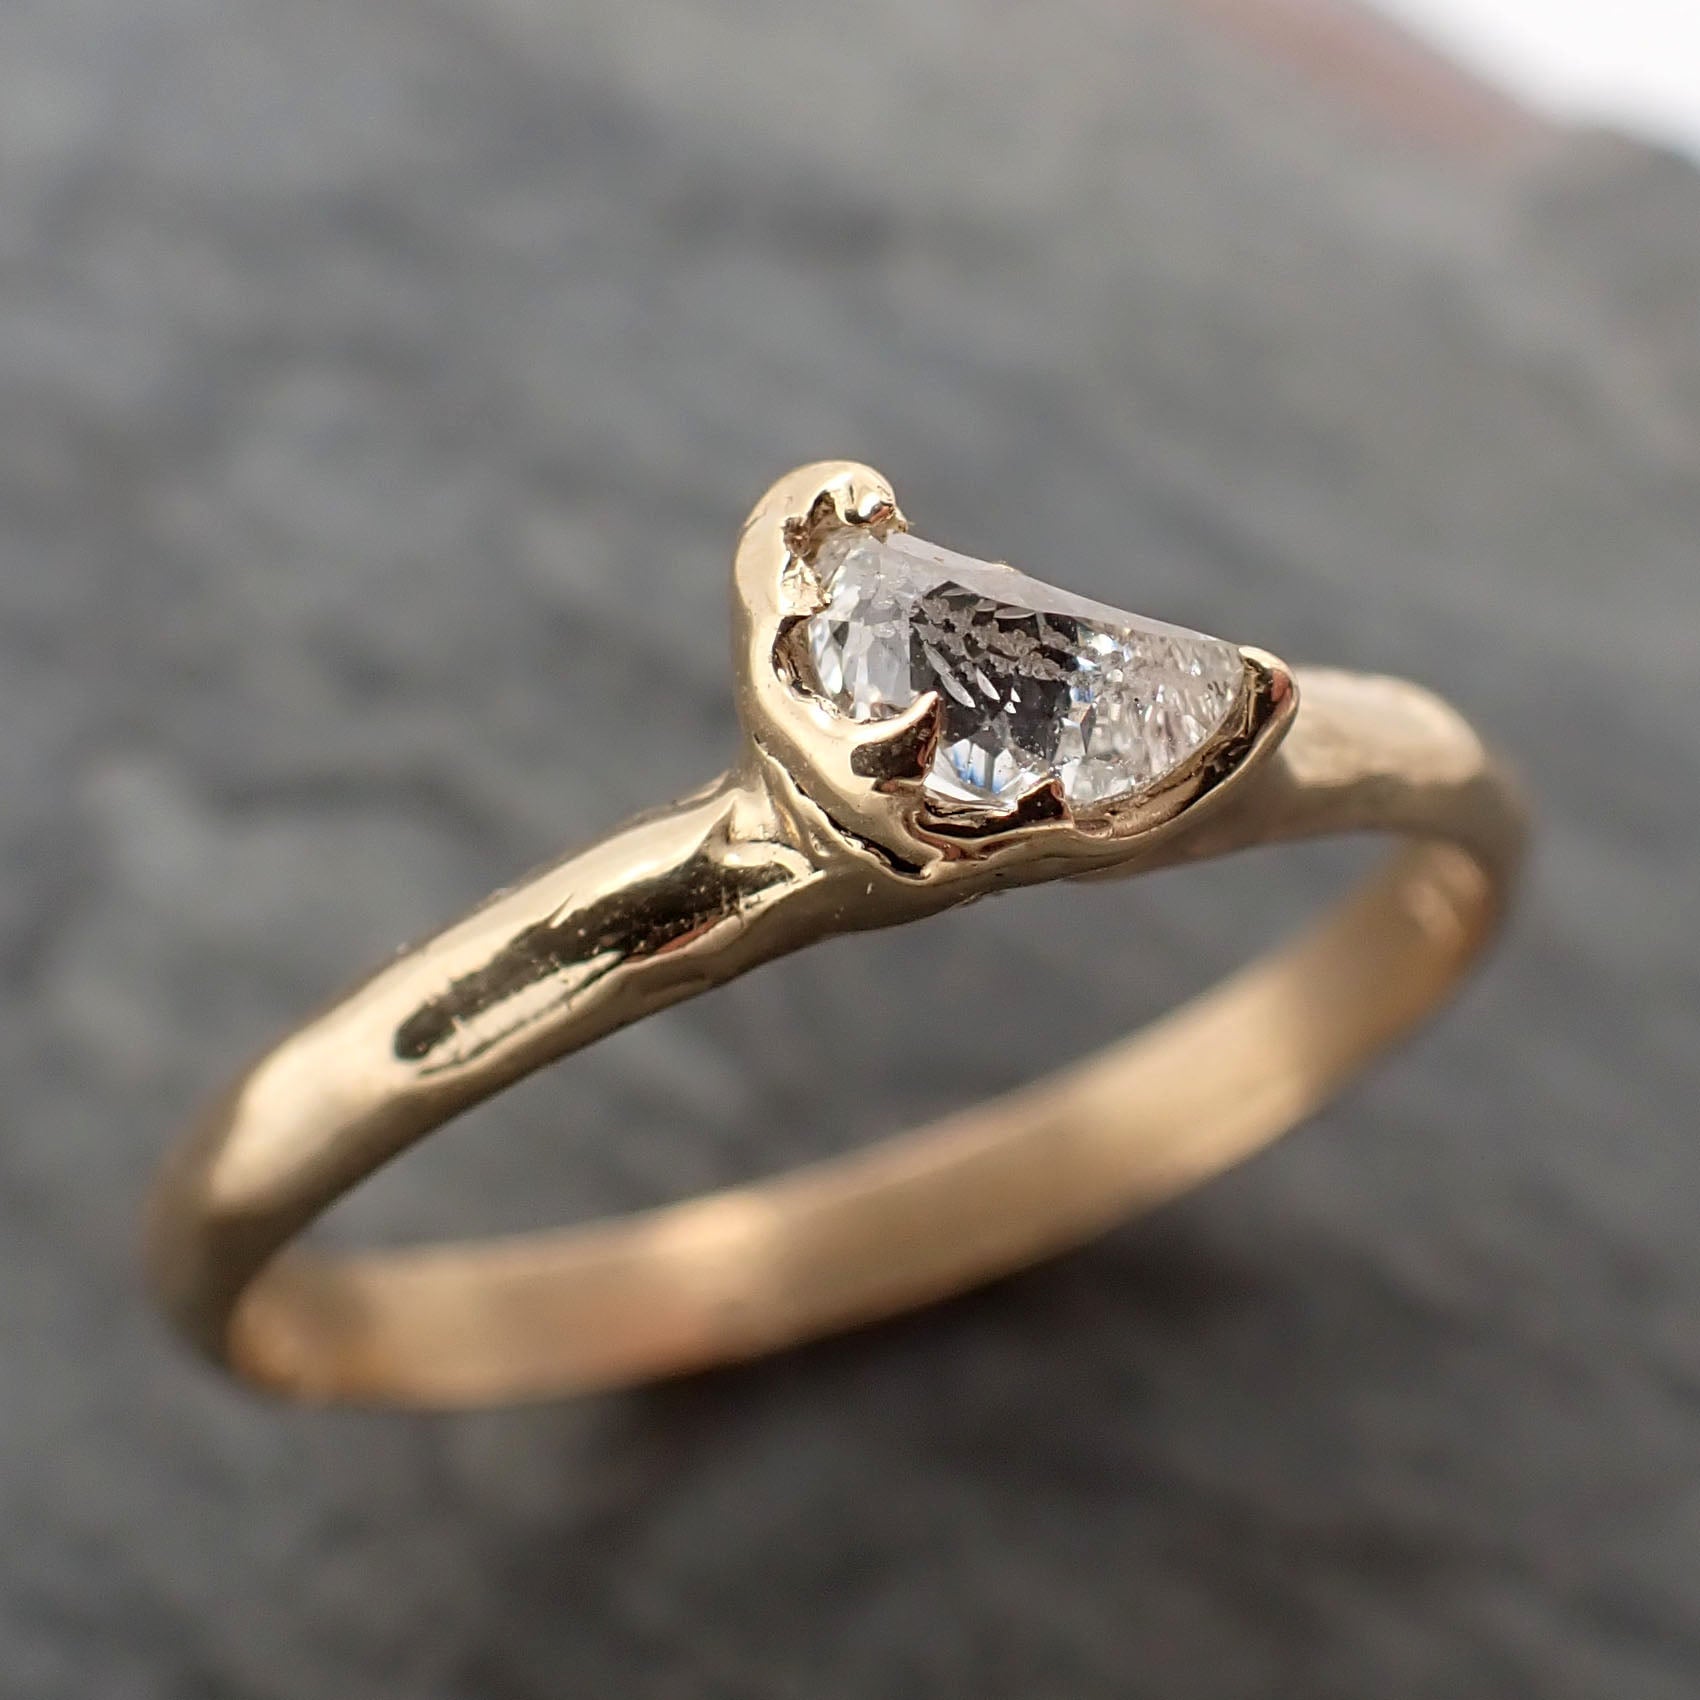 fancy cut moon diamond engagement 18k yellow gold solitaire wedding ring byangeline 2341 Alternative Engagement